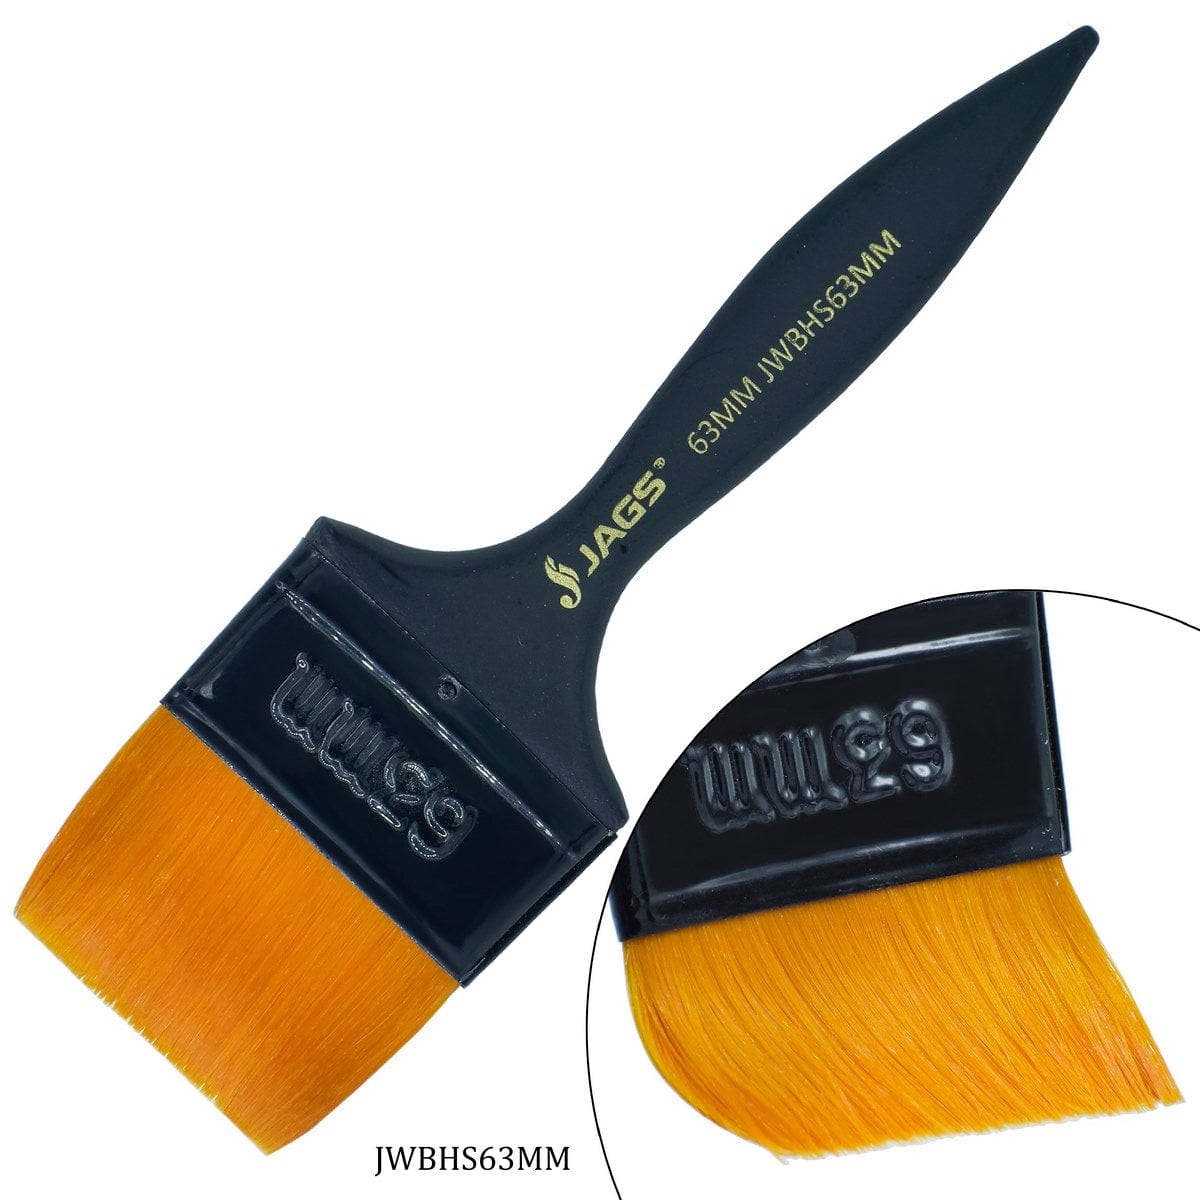 jags-mumbai Brush Premium Synthetic Hair Wash Brush - 63MM